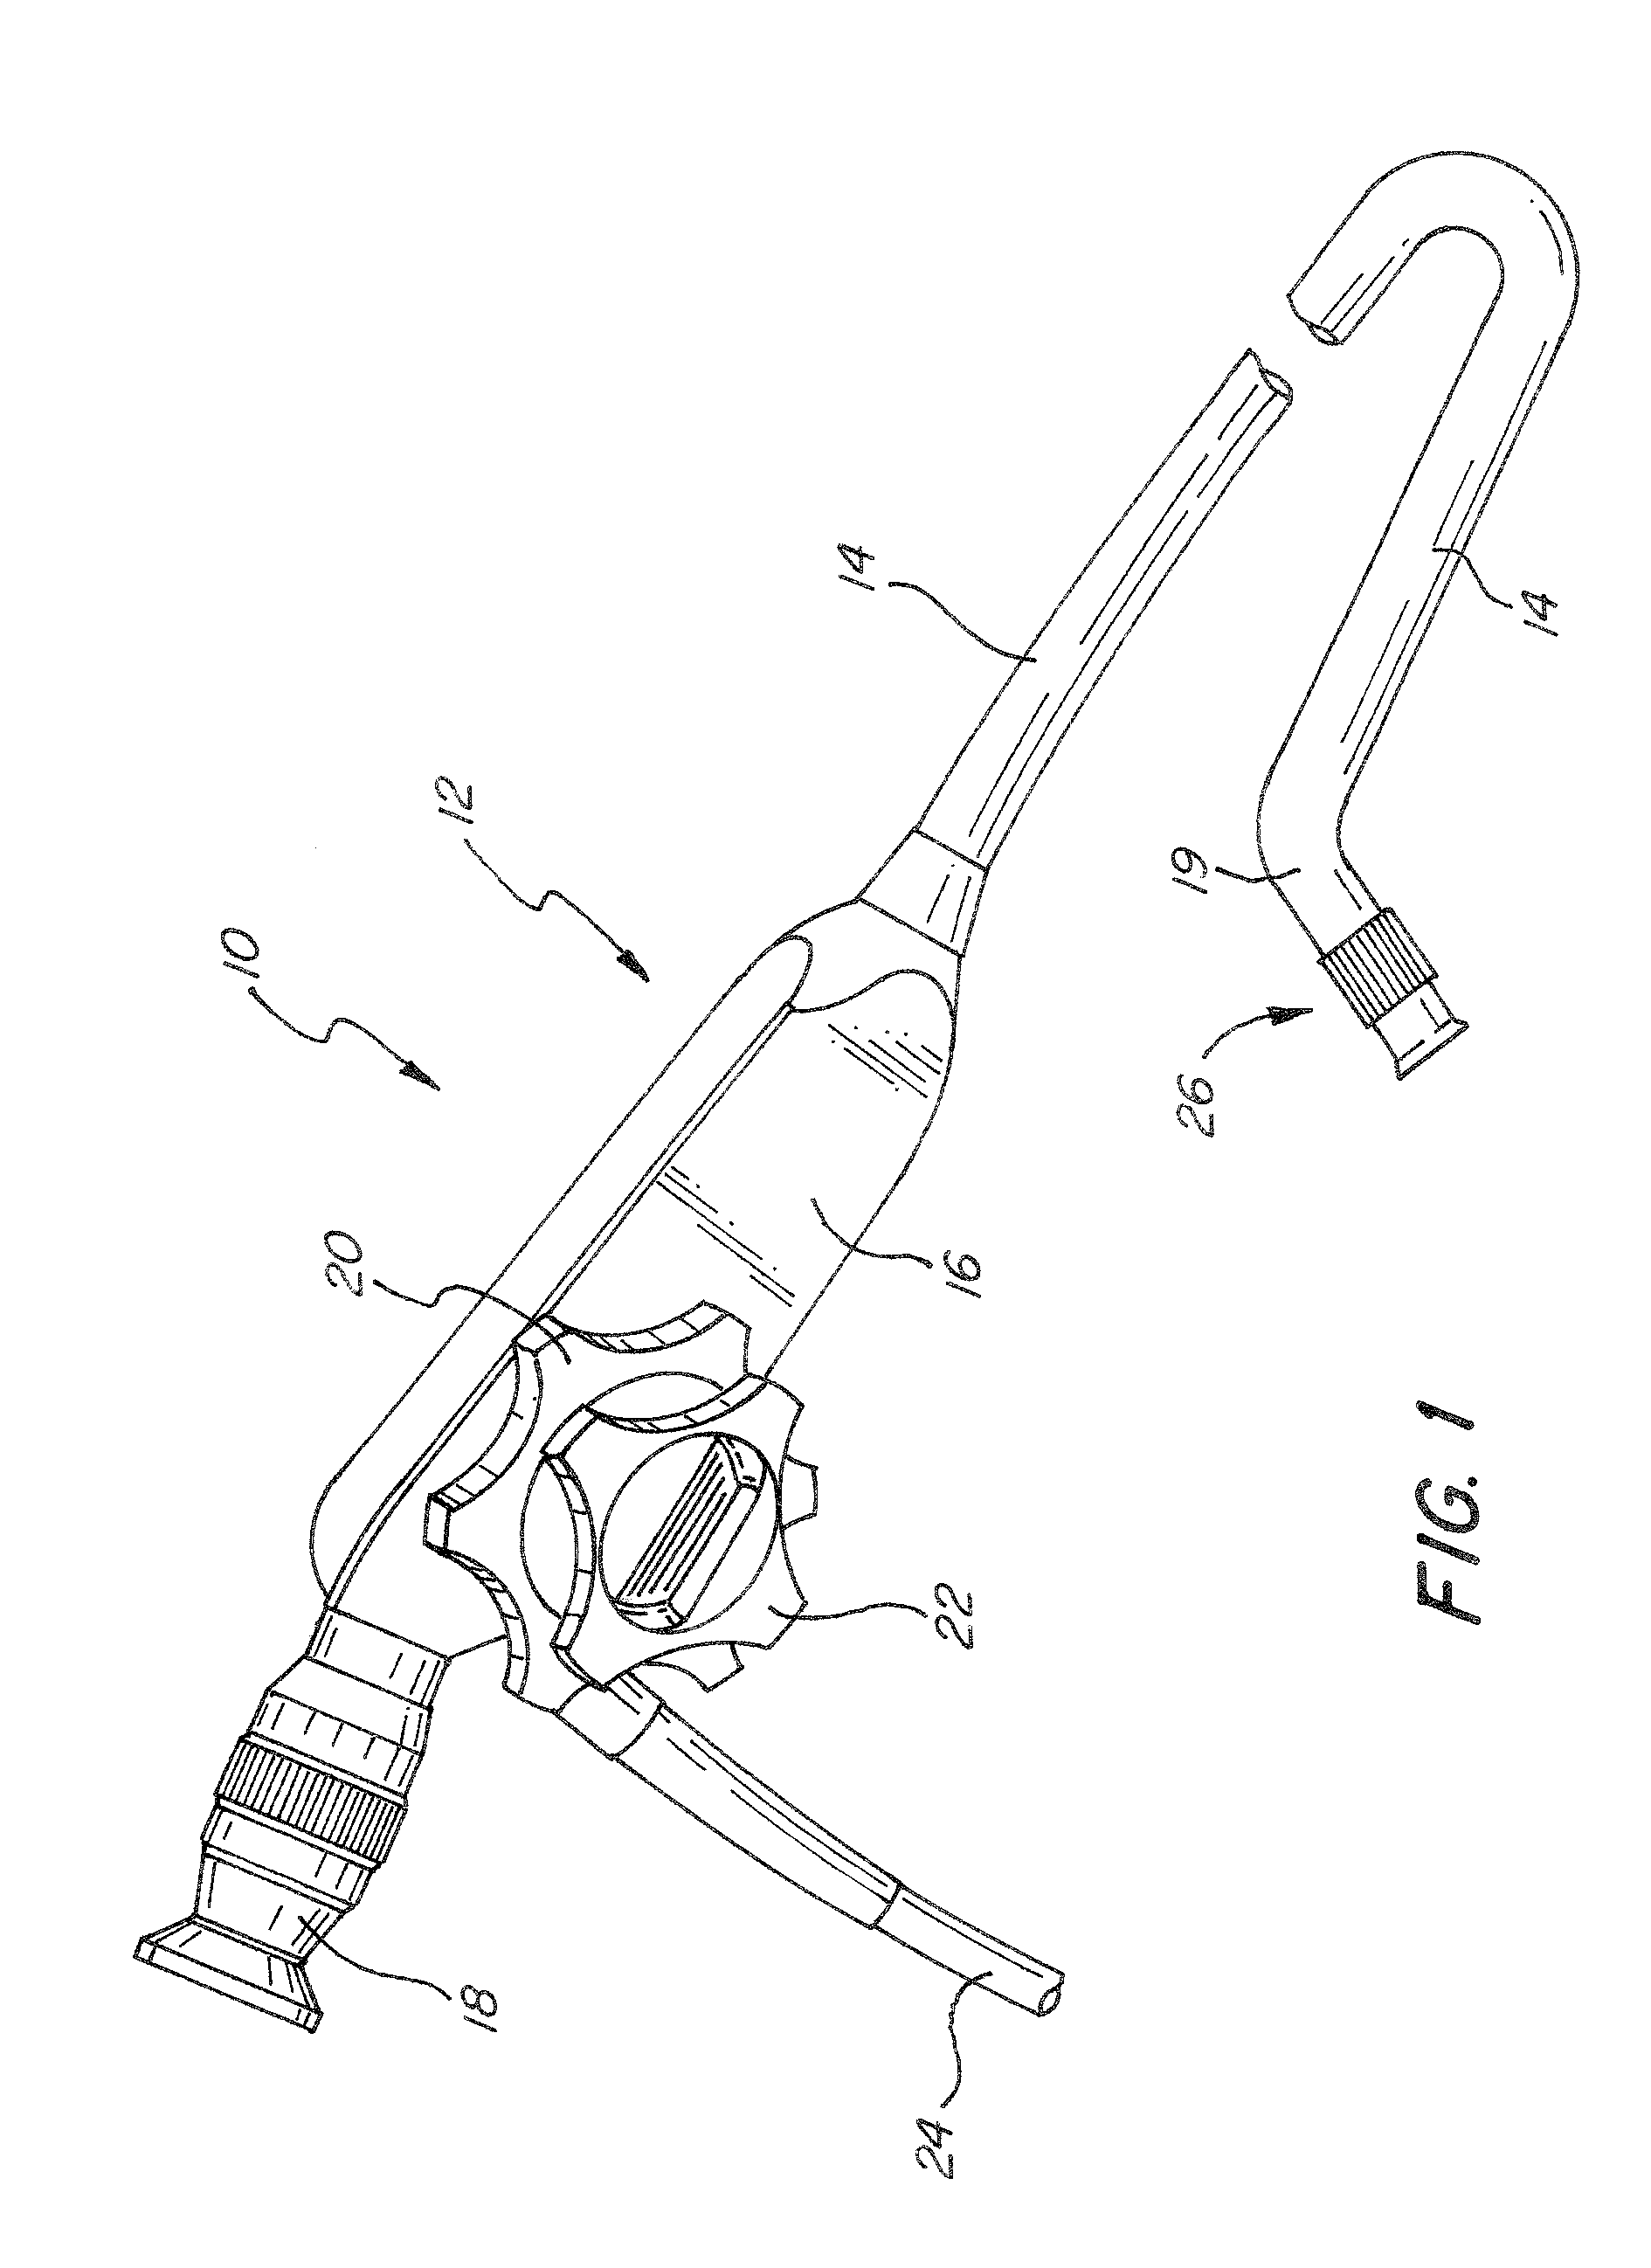 Optical instrument, in particular an endoscope, having an interchangeable head